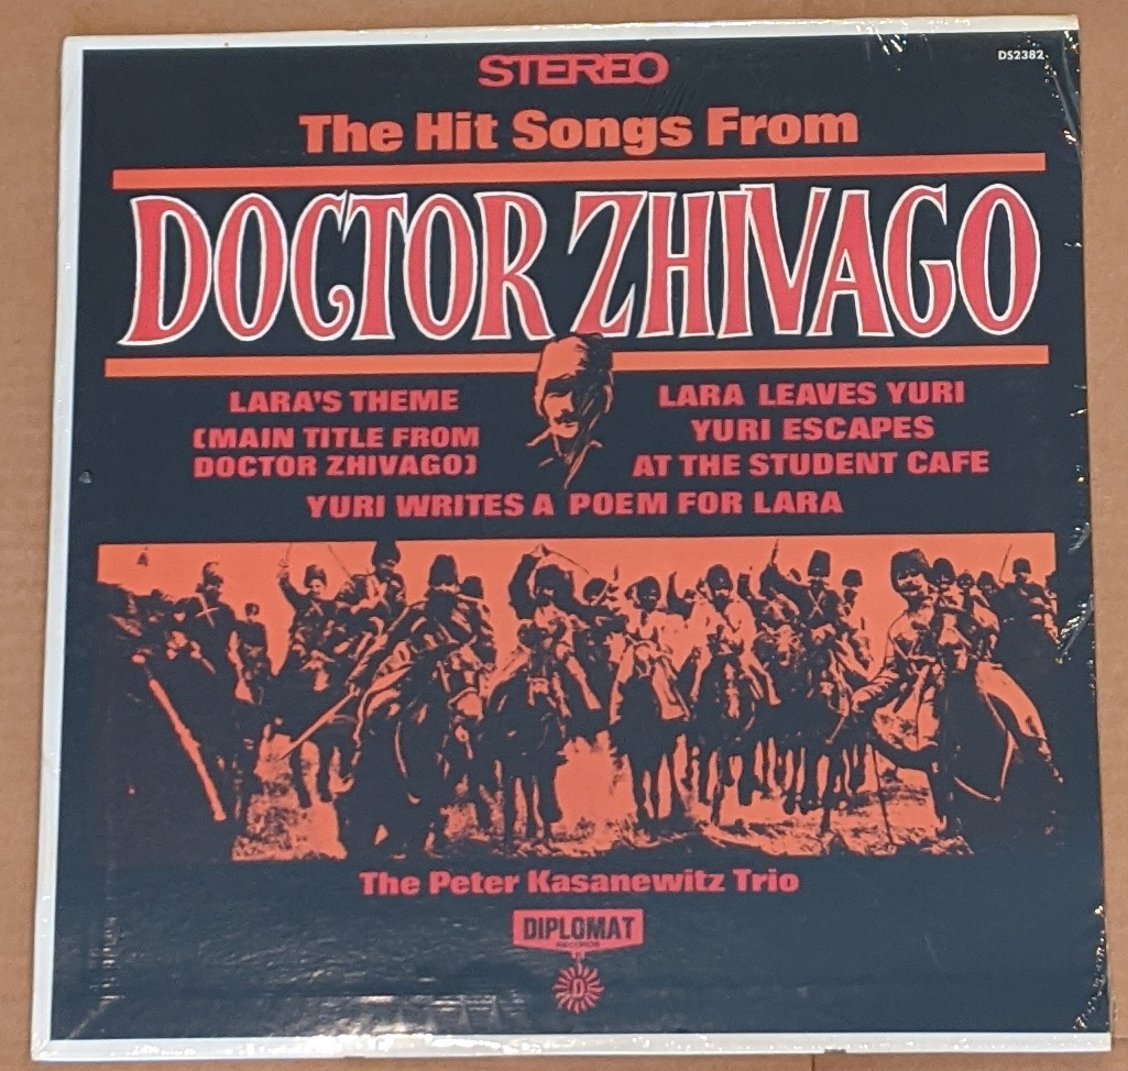 Peter Kasanewitz Trio: "Hit Songs from Doctor Zhivago" - '68 LP - Sealed!